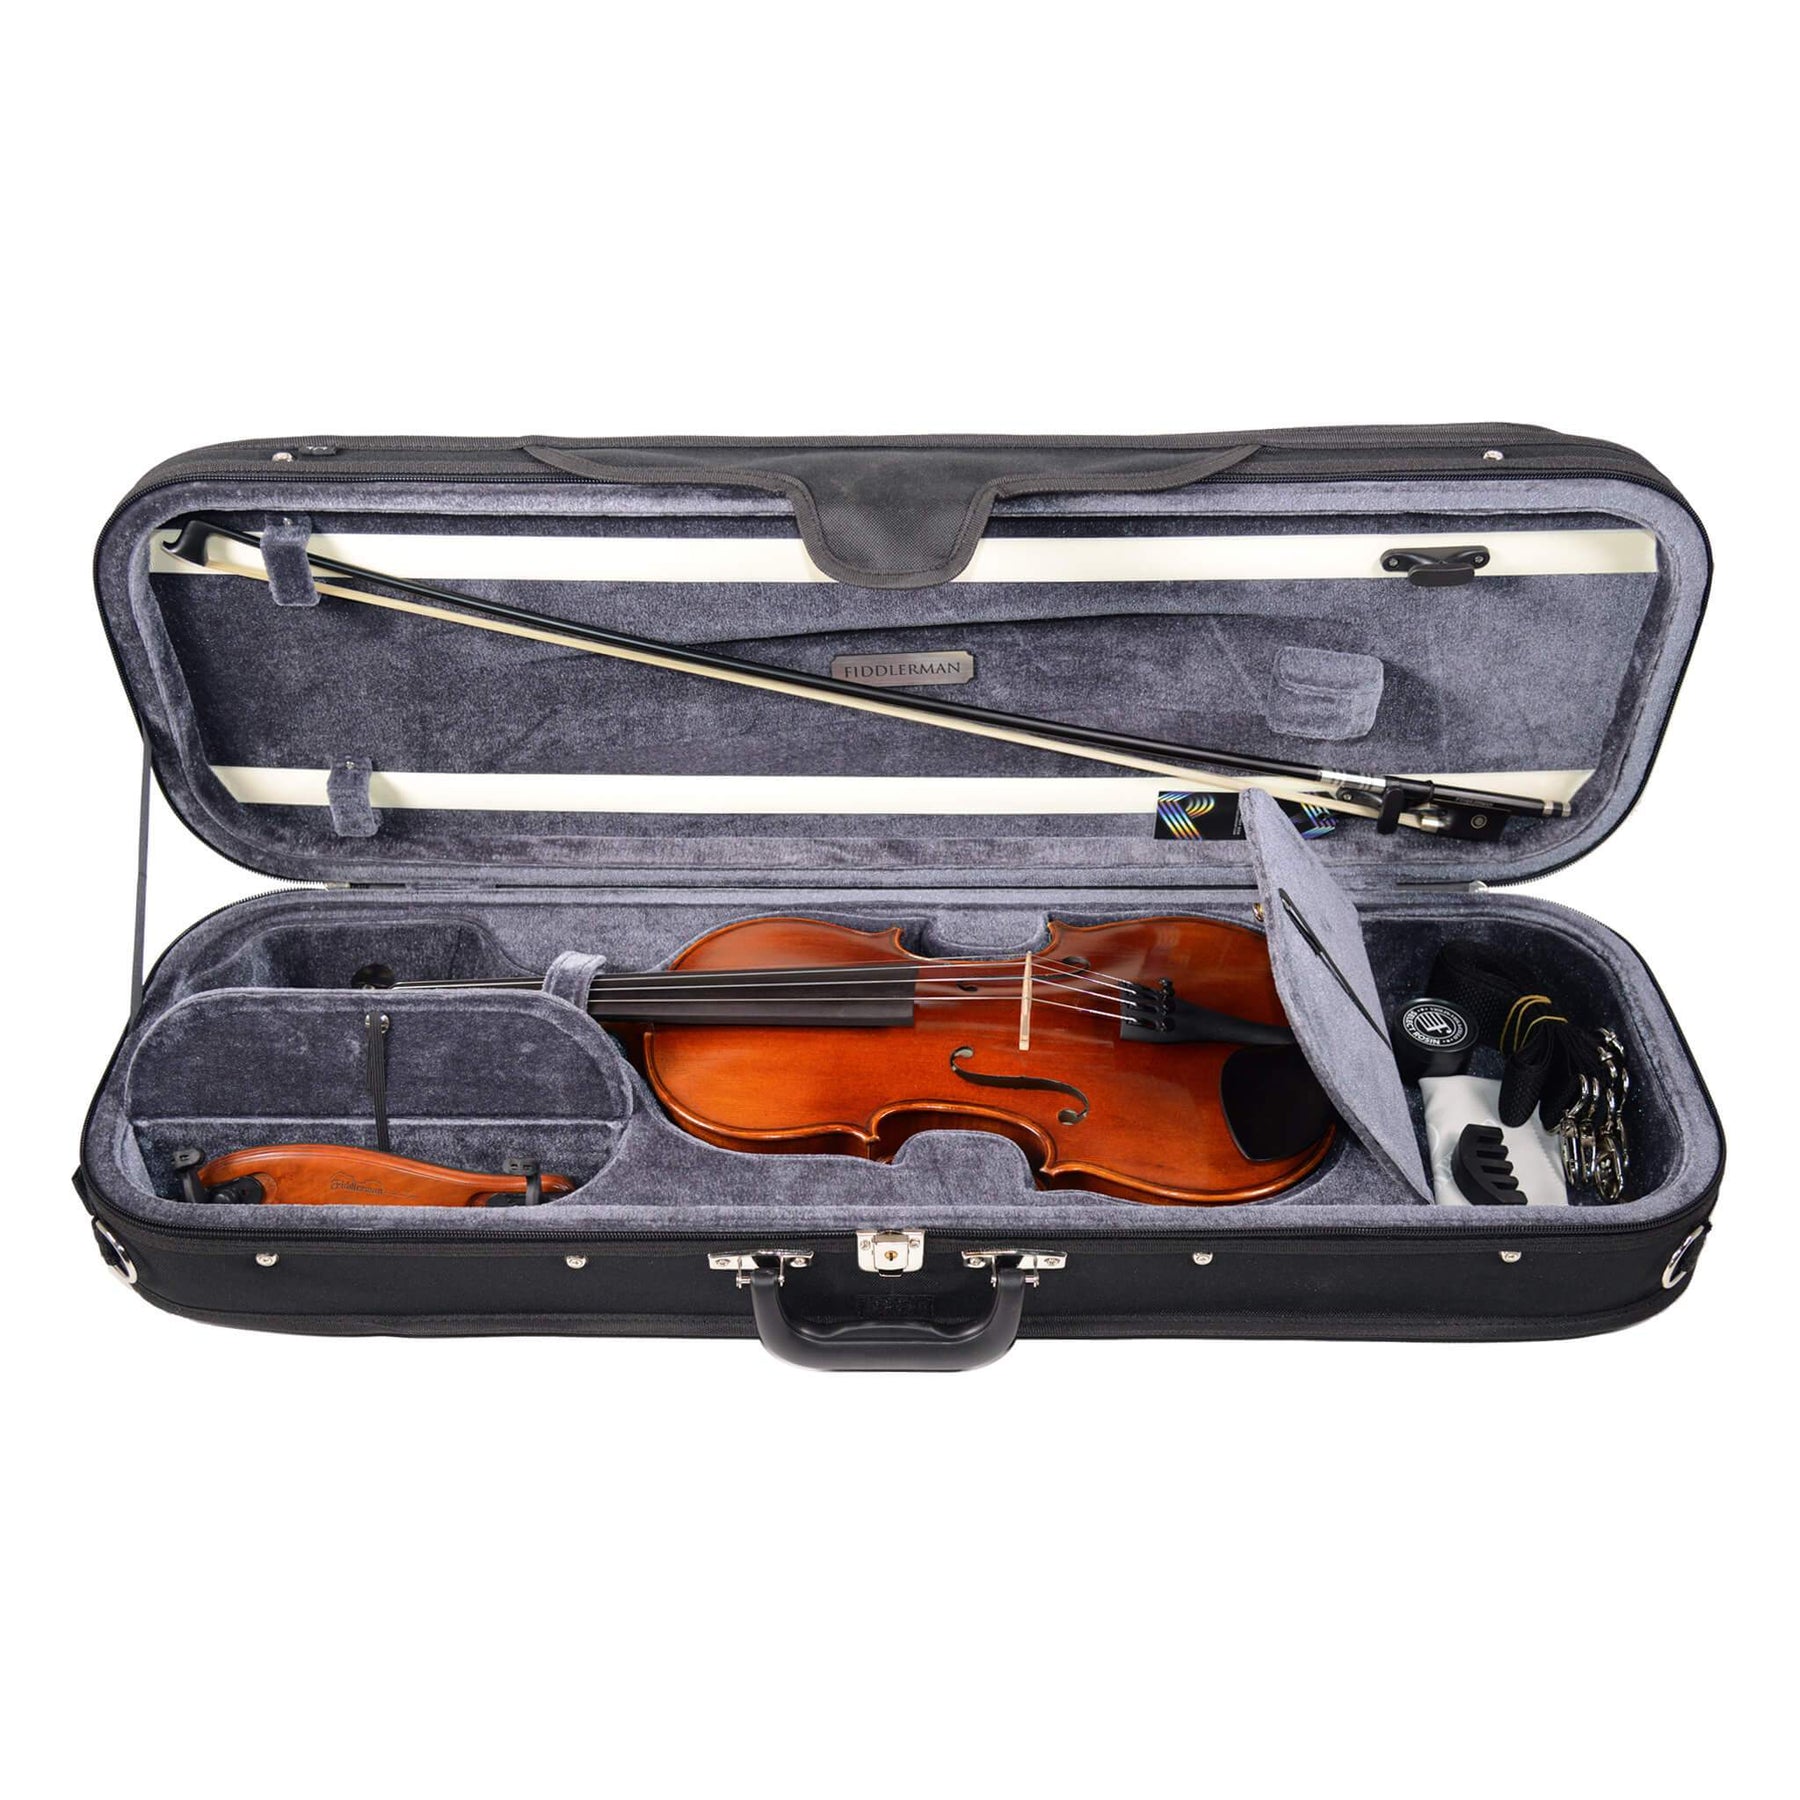 Fiddlerman Concert Violin Outfit